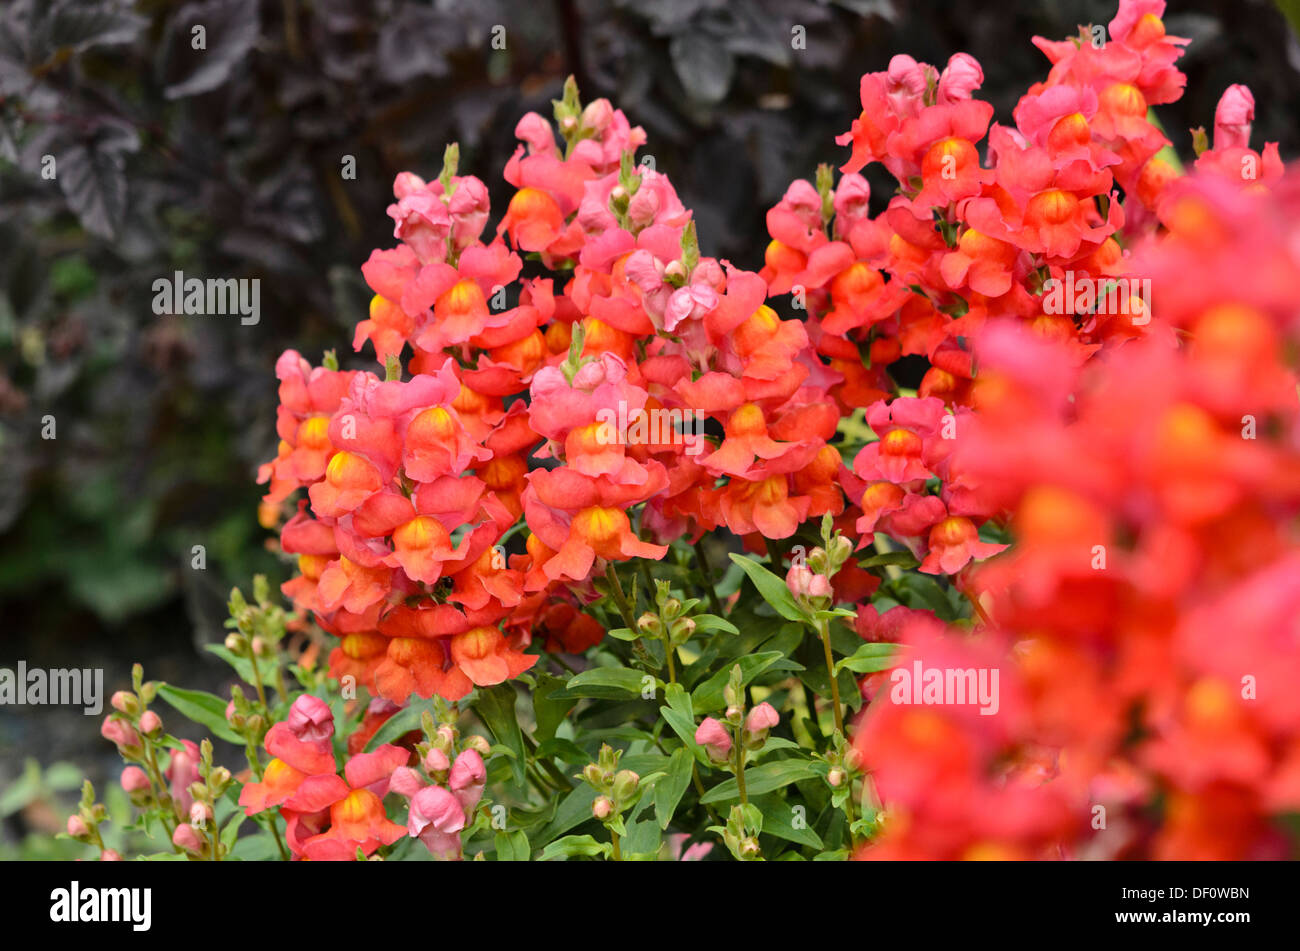 Snapdragon (Antirrhinum majus 'Sonnet Scarlet') Stock Photo